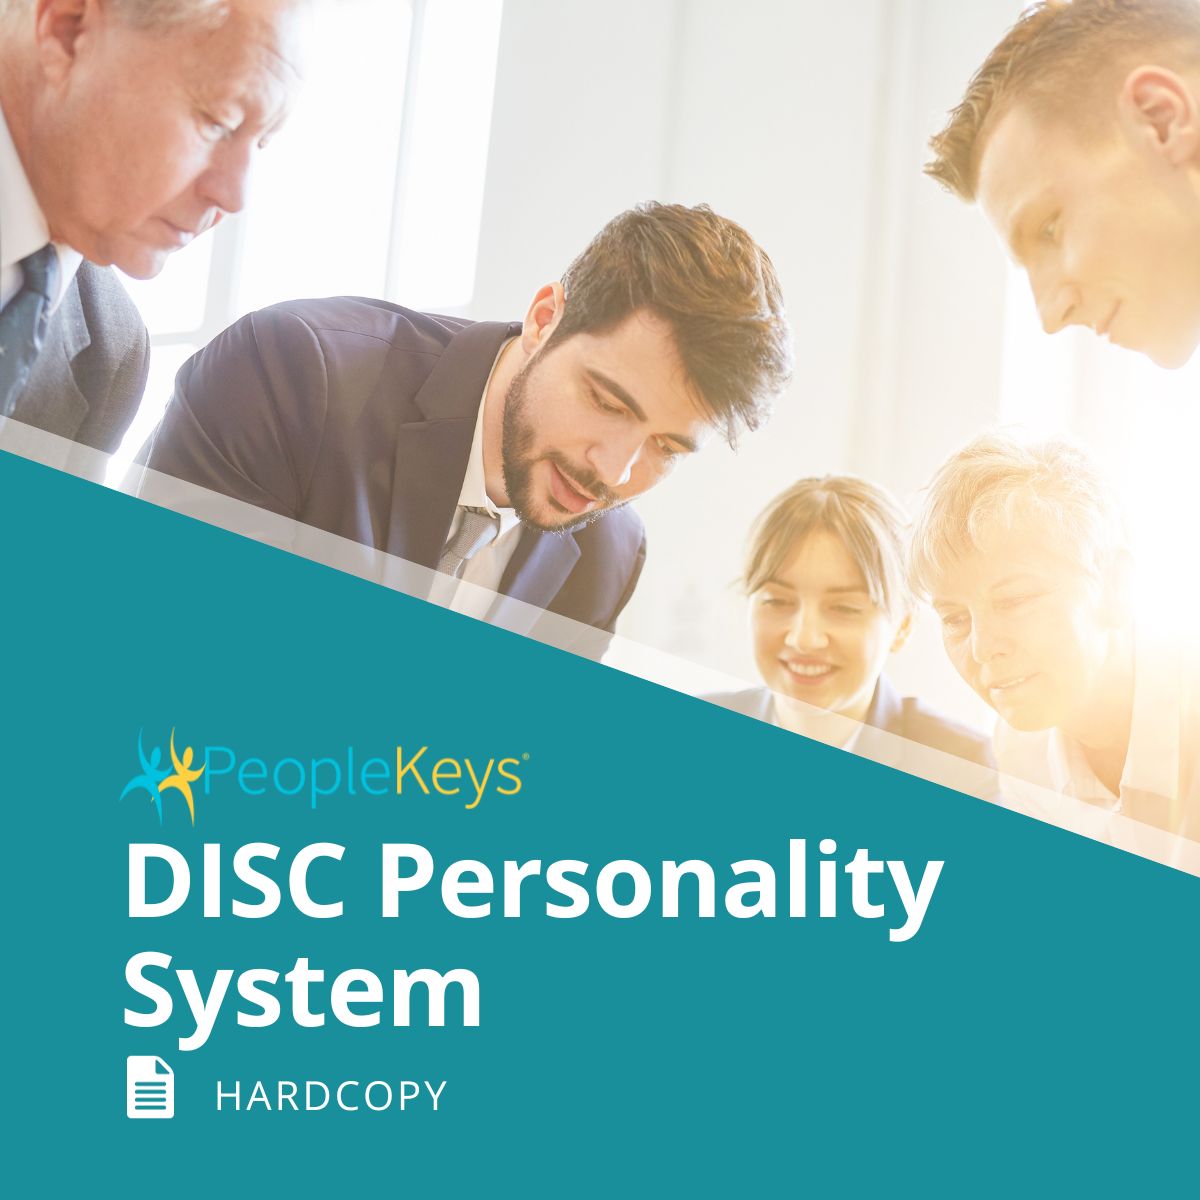 DISC Personality System (Hardcopy)